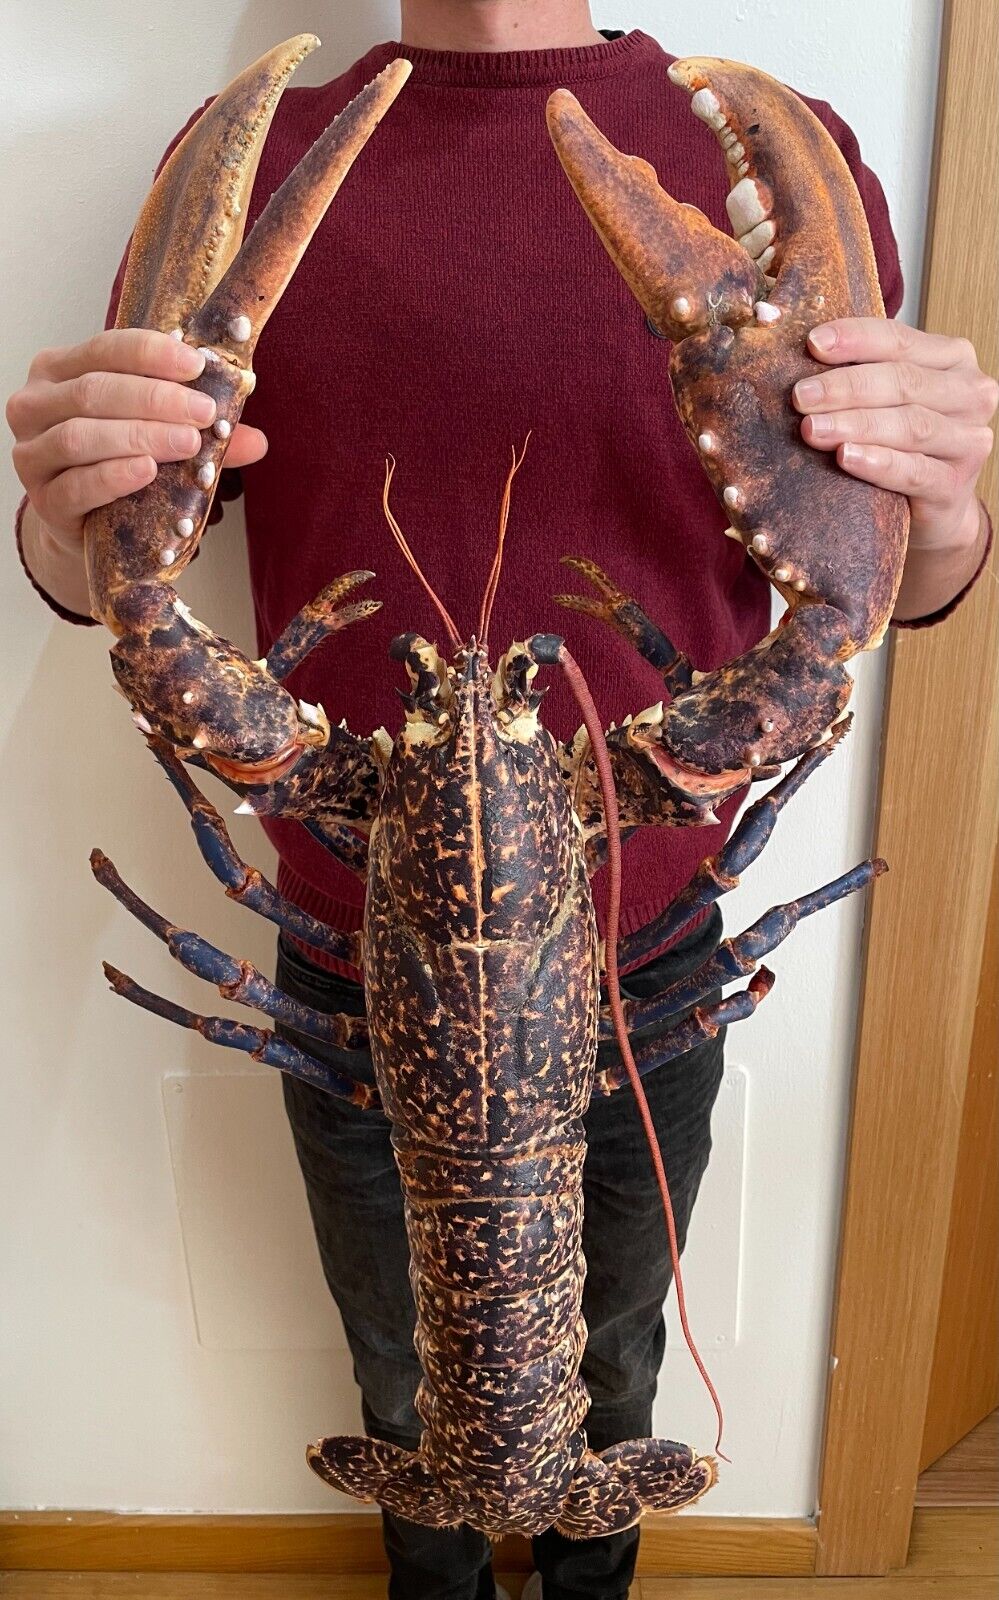 RARE Giant Crab Taxidermy, Giant Lobster Taxidermy Curiosity